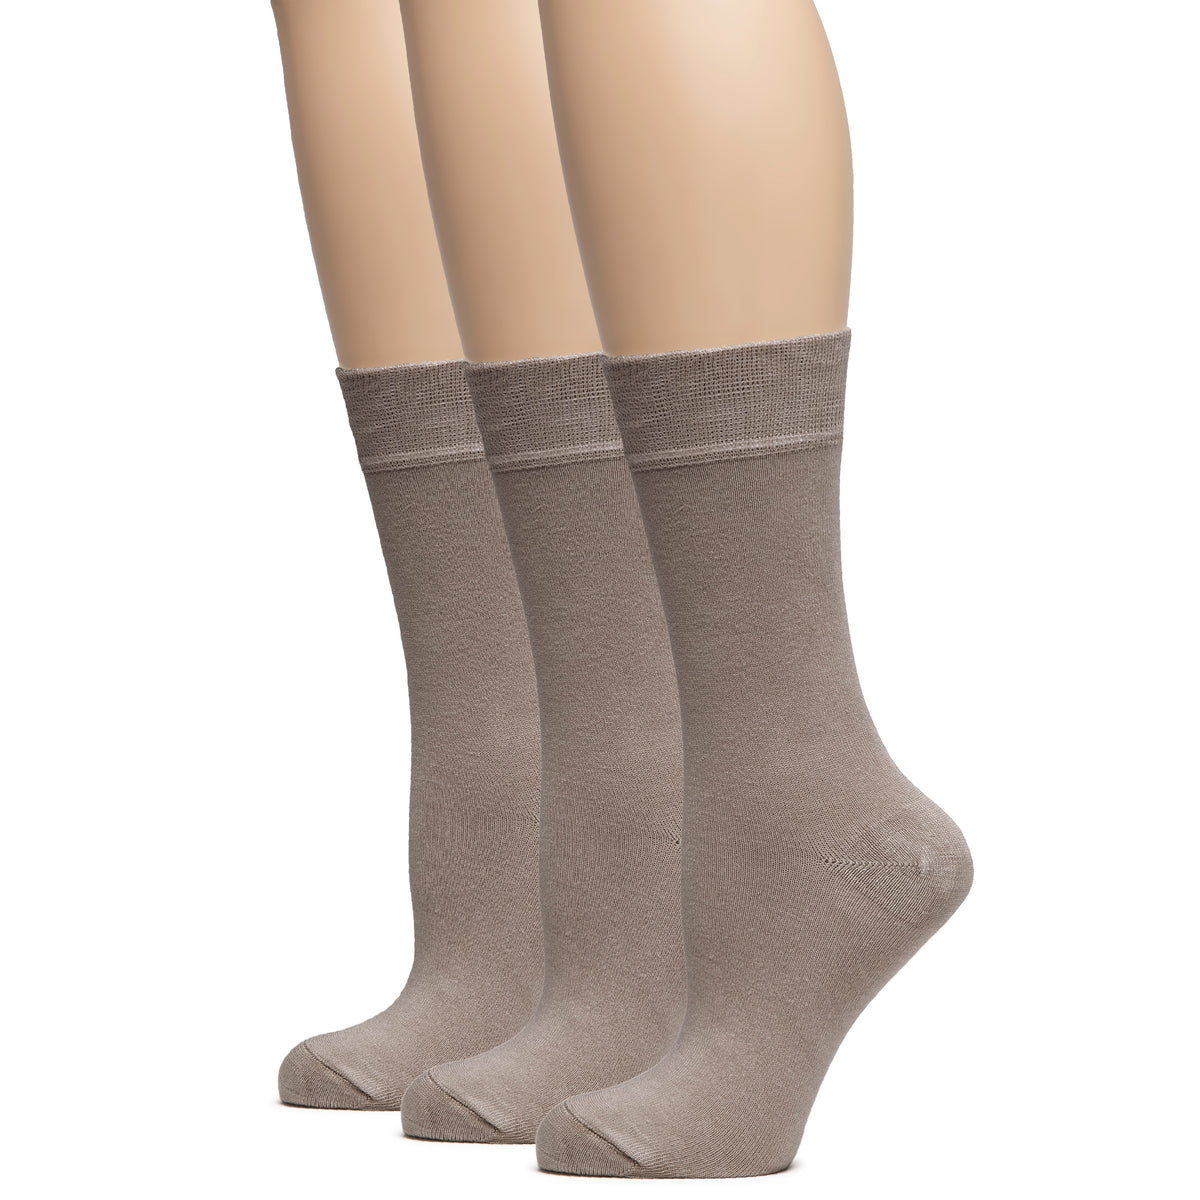 Hugh Ugoli Women's Bamboo Dress Socks Crew Soft Comfy Seamless Toe, 3 Pairs, Shoe Size: 5-8/9-11 | Shoe Size: 5-8 | Dark Brown